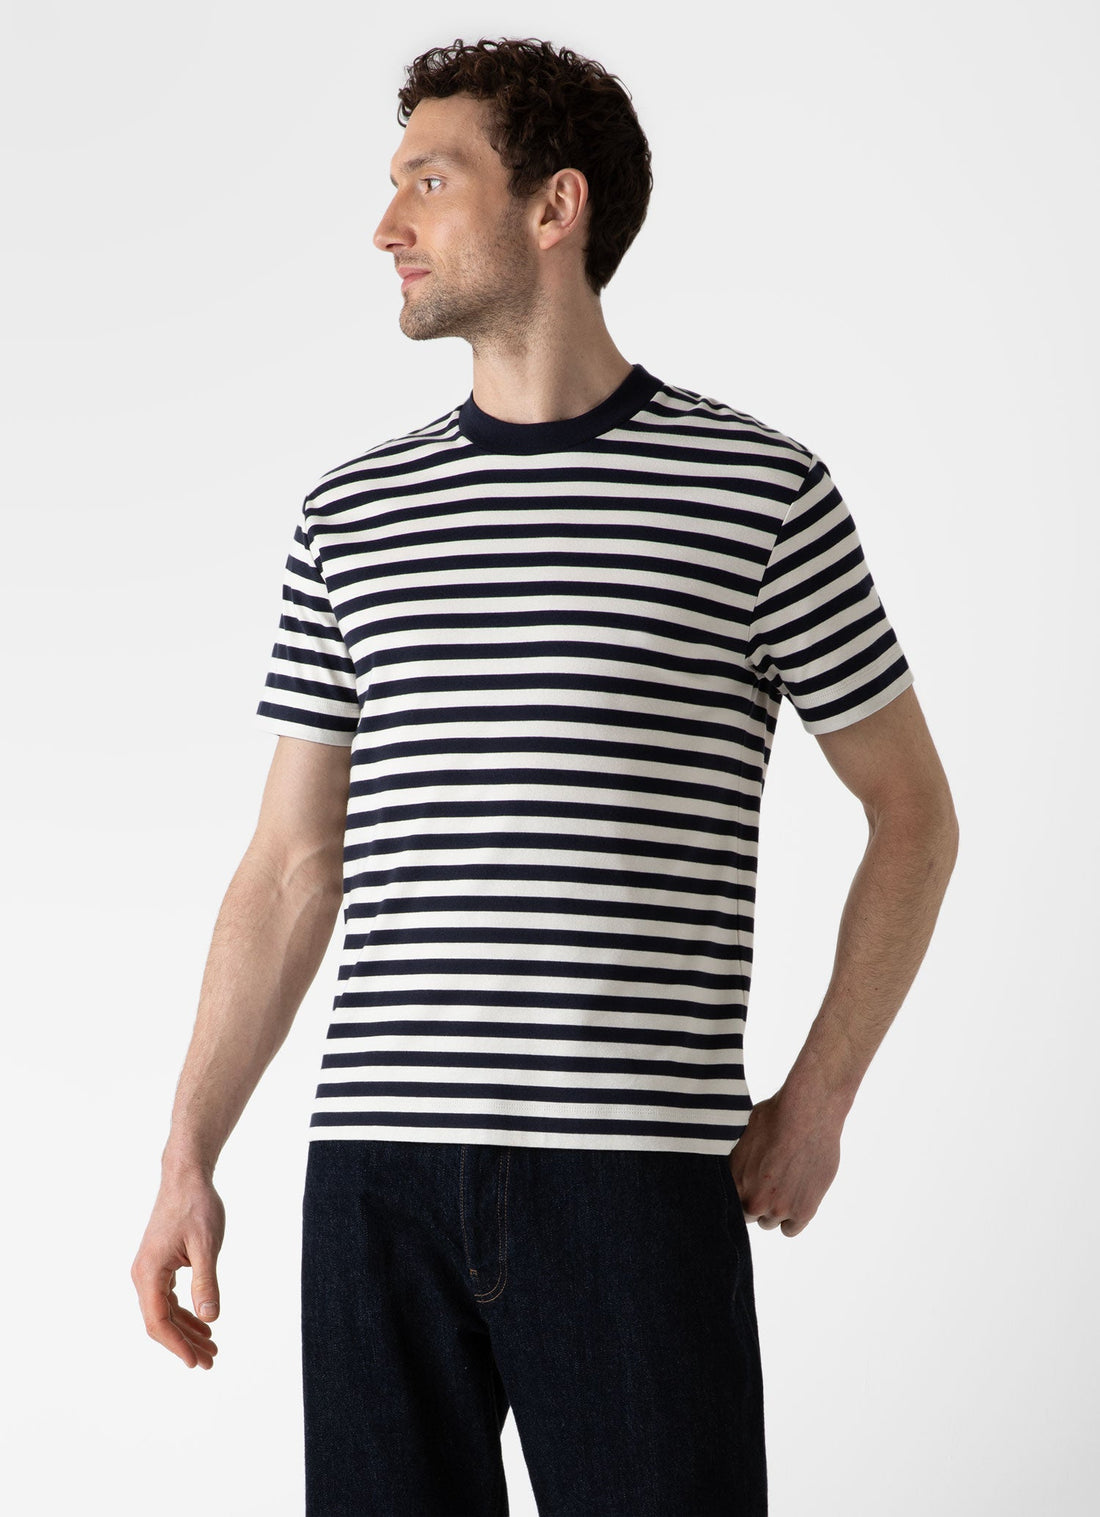 Men's Brushed Cotton T-shirt in Navy/Ecru Block Stripe